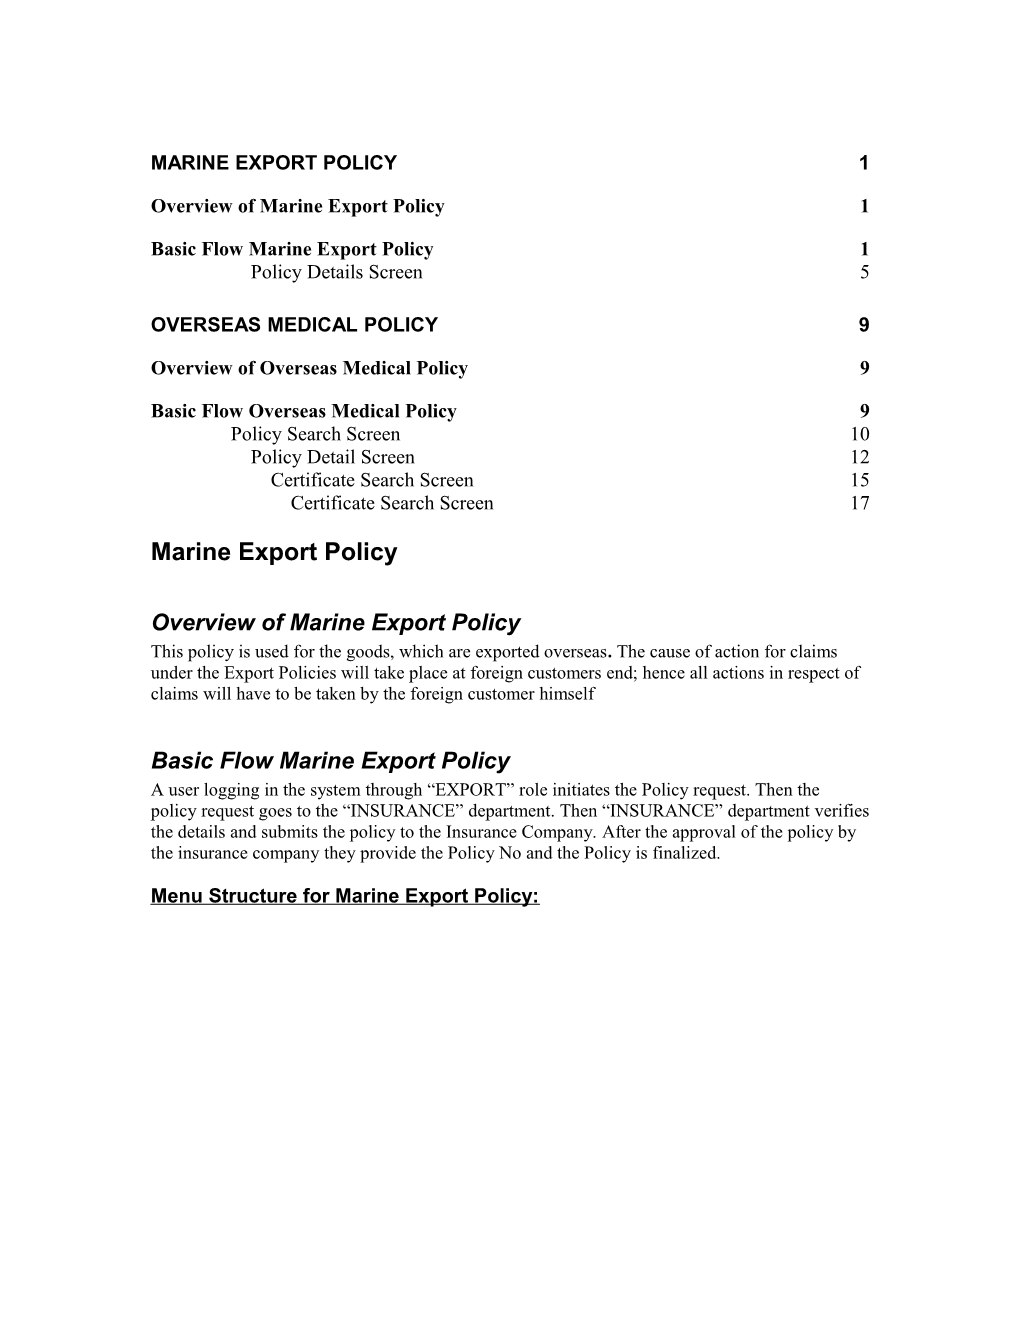 Marine Export Policy